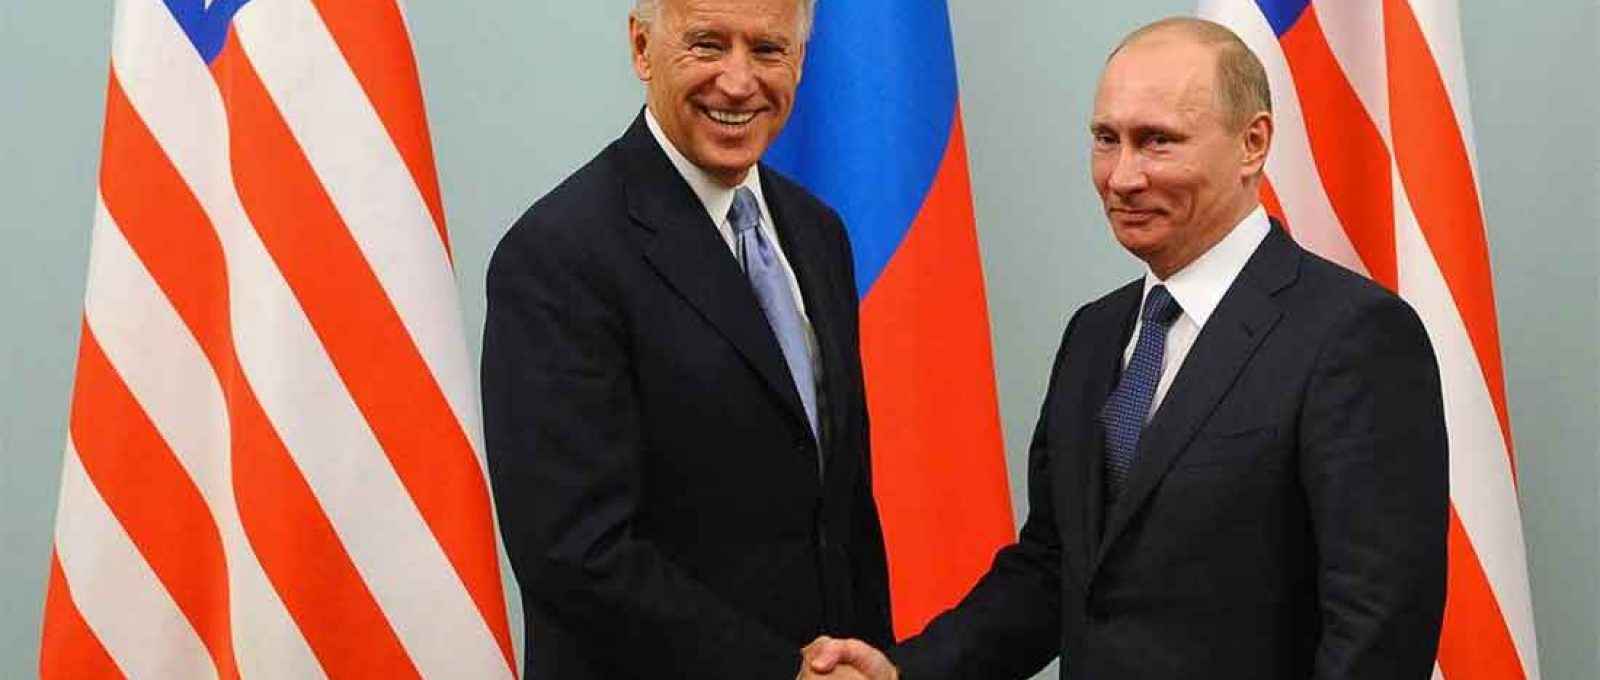 Os presidentes dos EUA, Joe Biden, e da Rússia, Vladimir Putin (Foto: Valery Sharifulin/Tass).